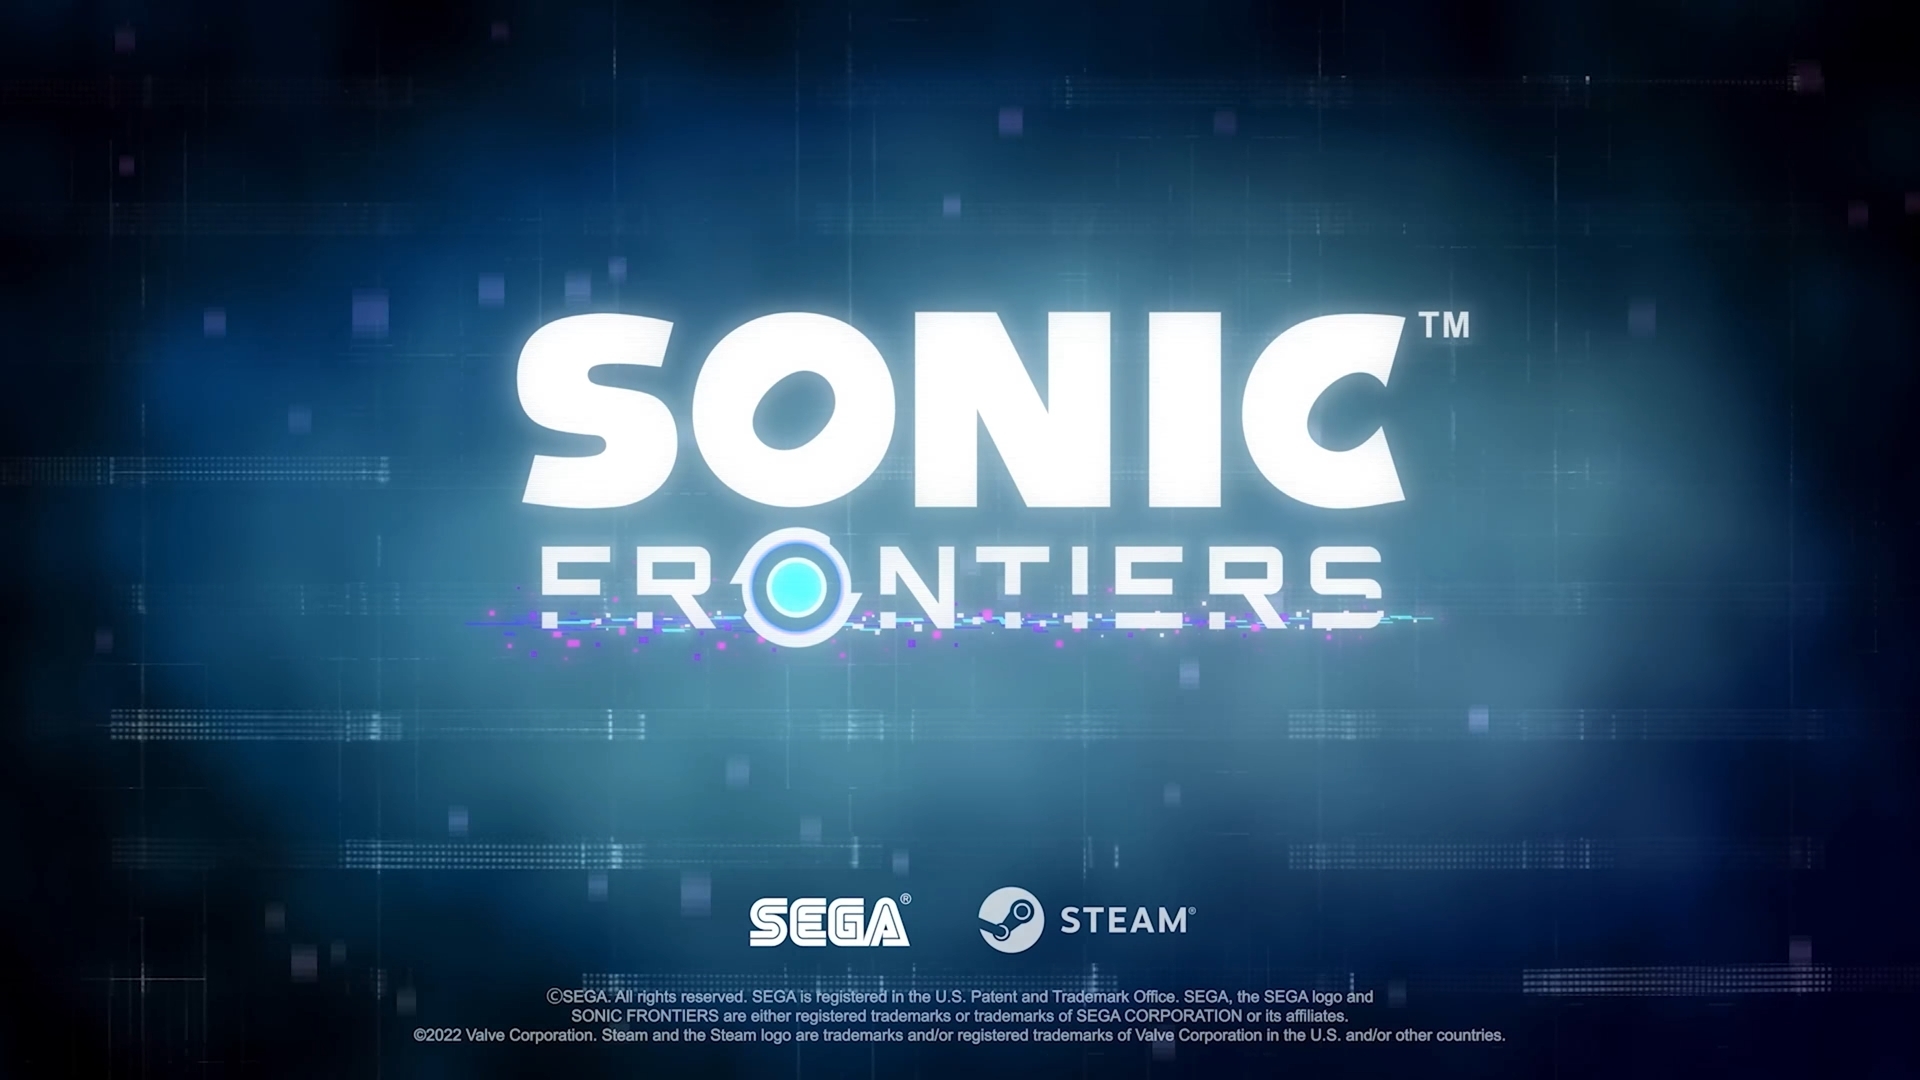 Sonic Frontiers 2